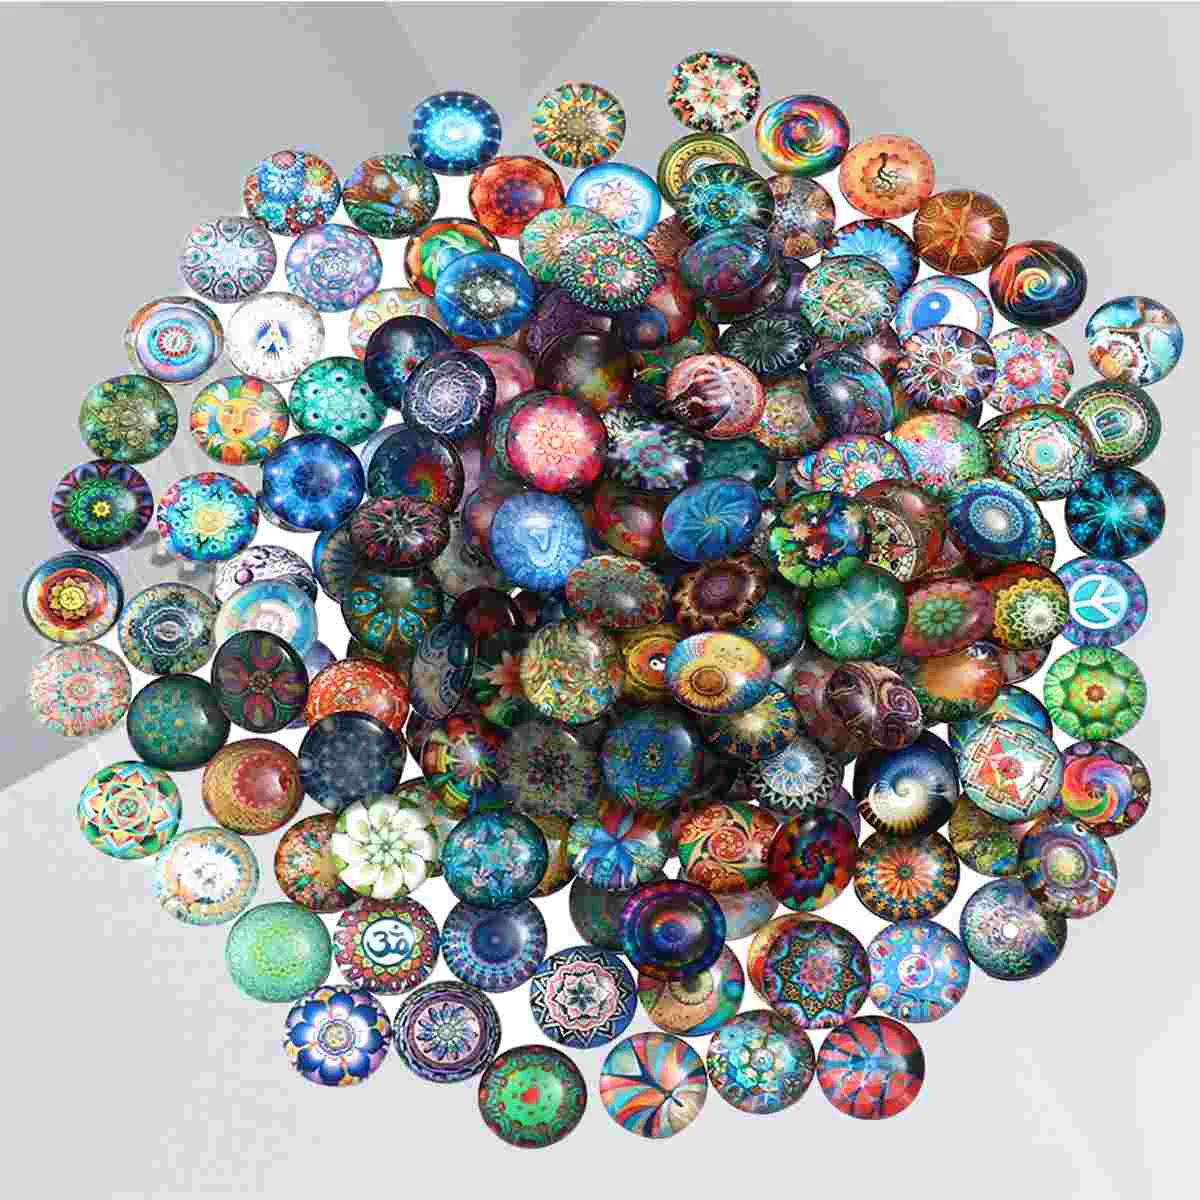 Купи Mosaic Tilesglass Round Flatback Jewelry Suppliescrafts Mixed Charms Pendant Snap Gemstones Resin Decoration Cab Dome Making за 485 рублей в магазине AliExpress